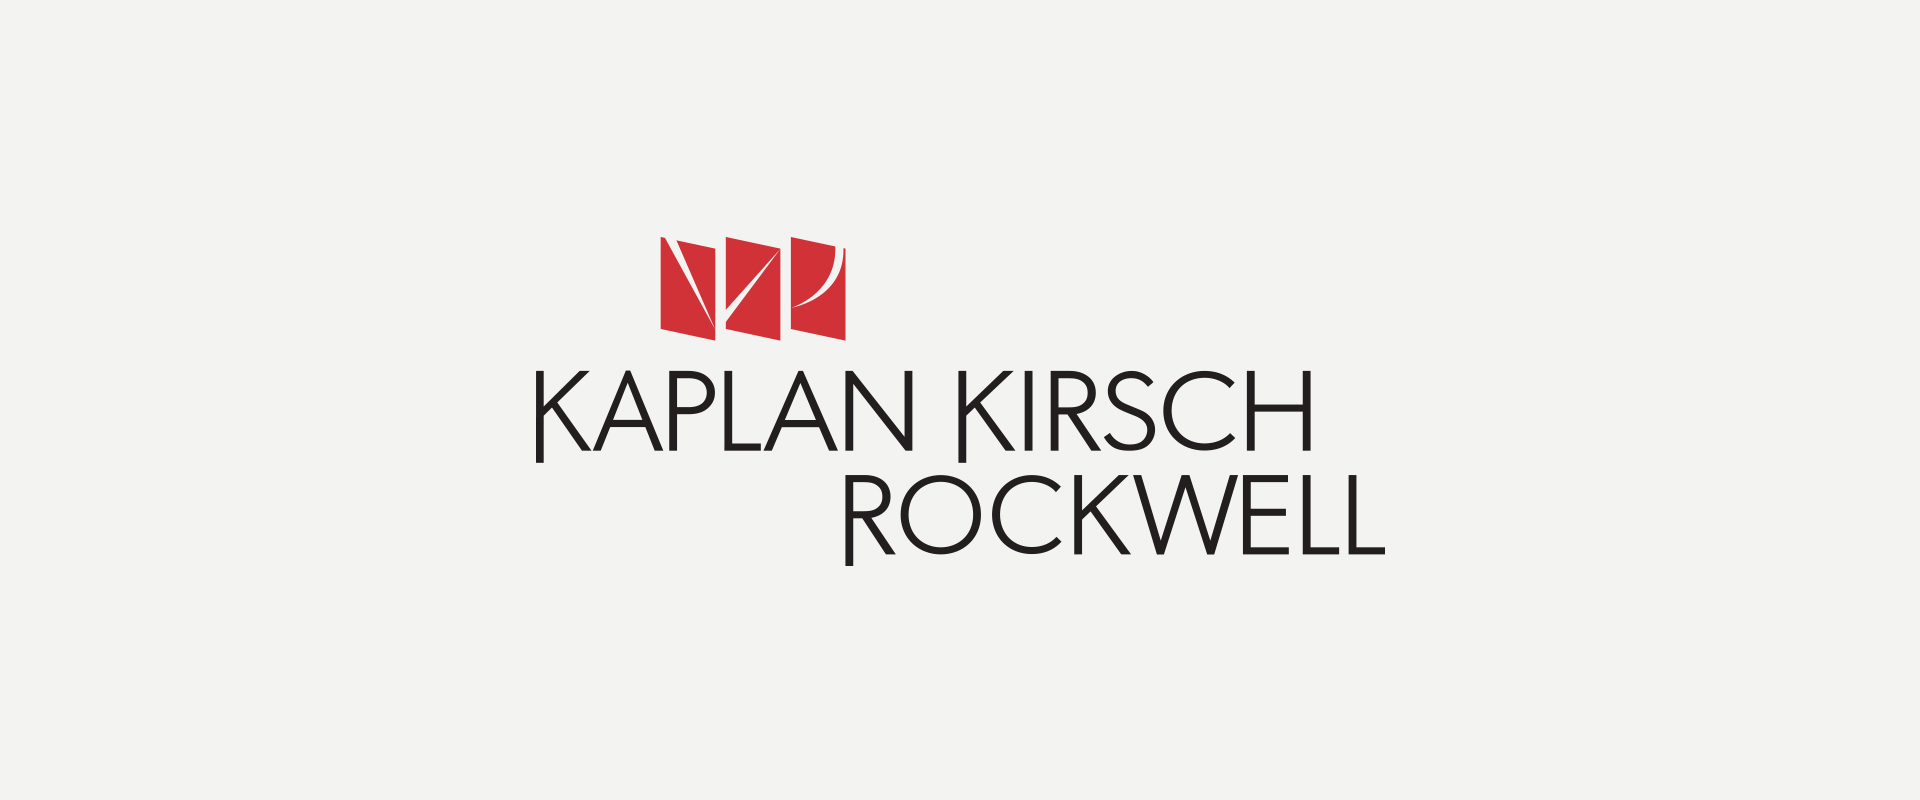 Kaplan Kirsch Rockwell Logo Big